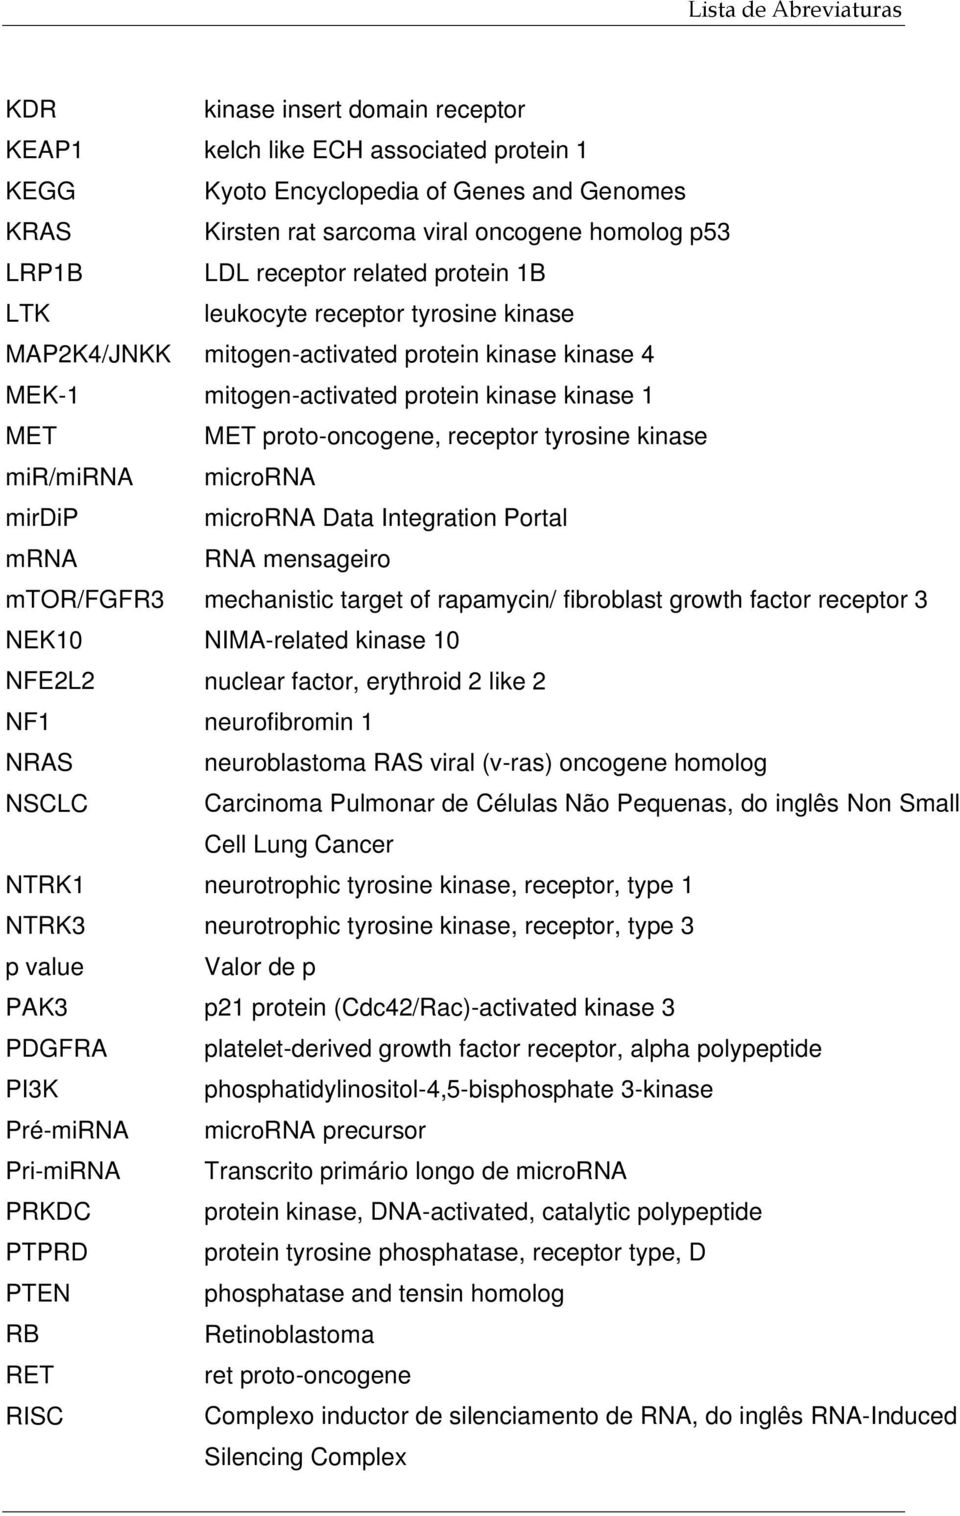 proto-oncogene, receptor tyrosine kinase mir/mirna microrna mirdip microrna Data Integration Portal mrna RNA mensageiro mtor/fgfr3 mechanistic target of rapamycin/ fibroblast growth factor receptor 3